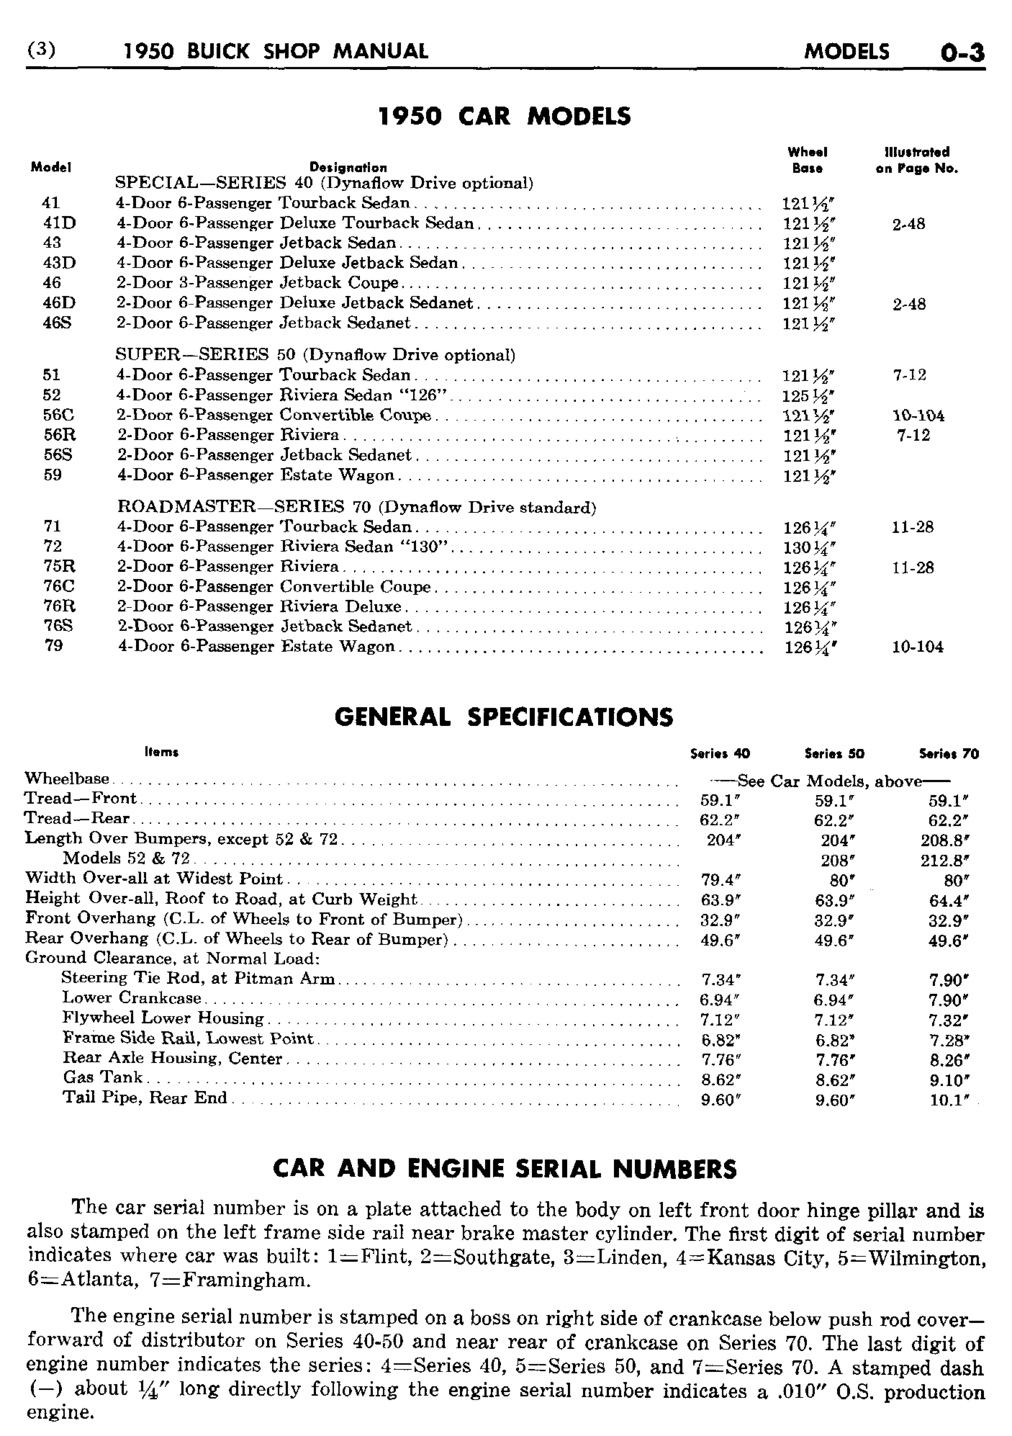 n_01 1950 Buick Shop Manual - Gen Information-005-005.jpg